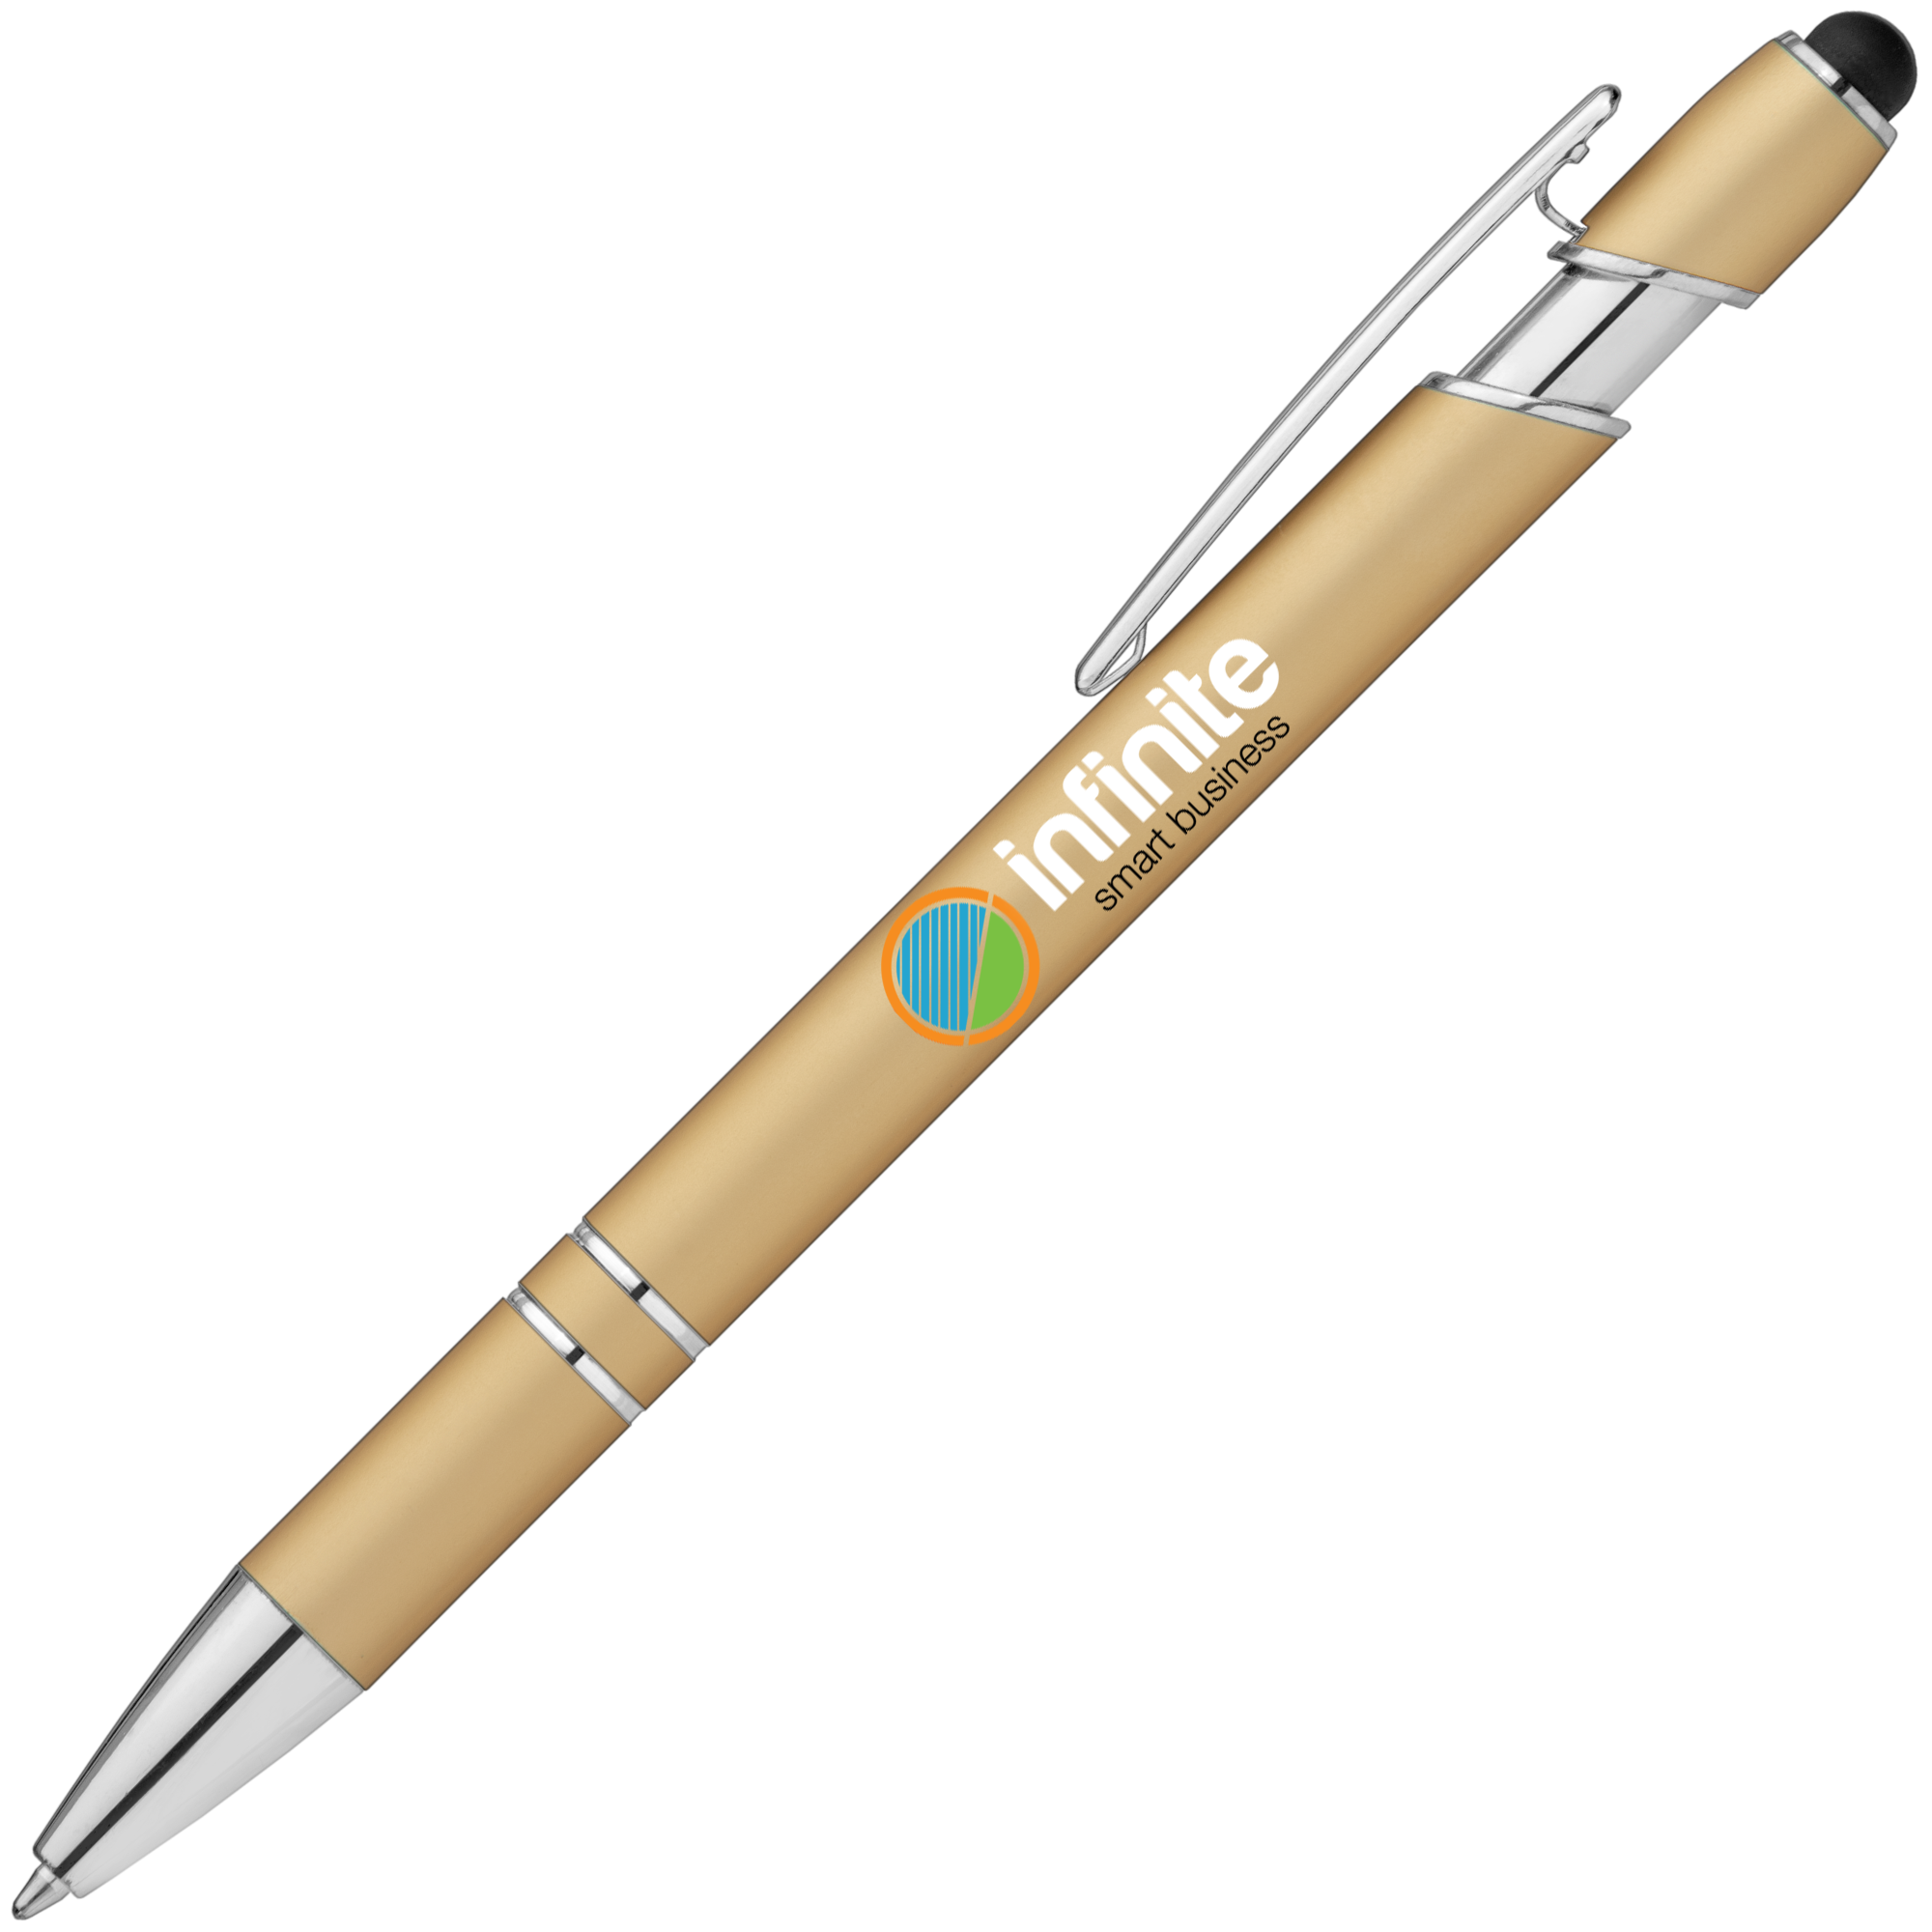 Custom Marker Pens with Your Logo in Bulk